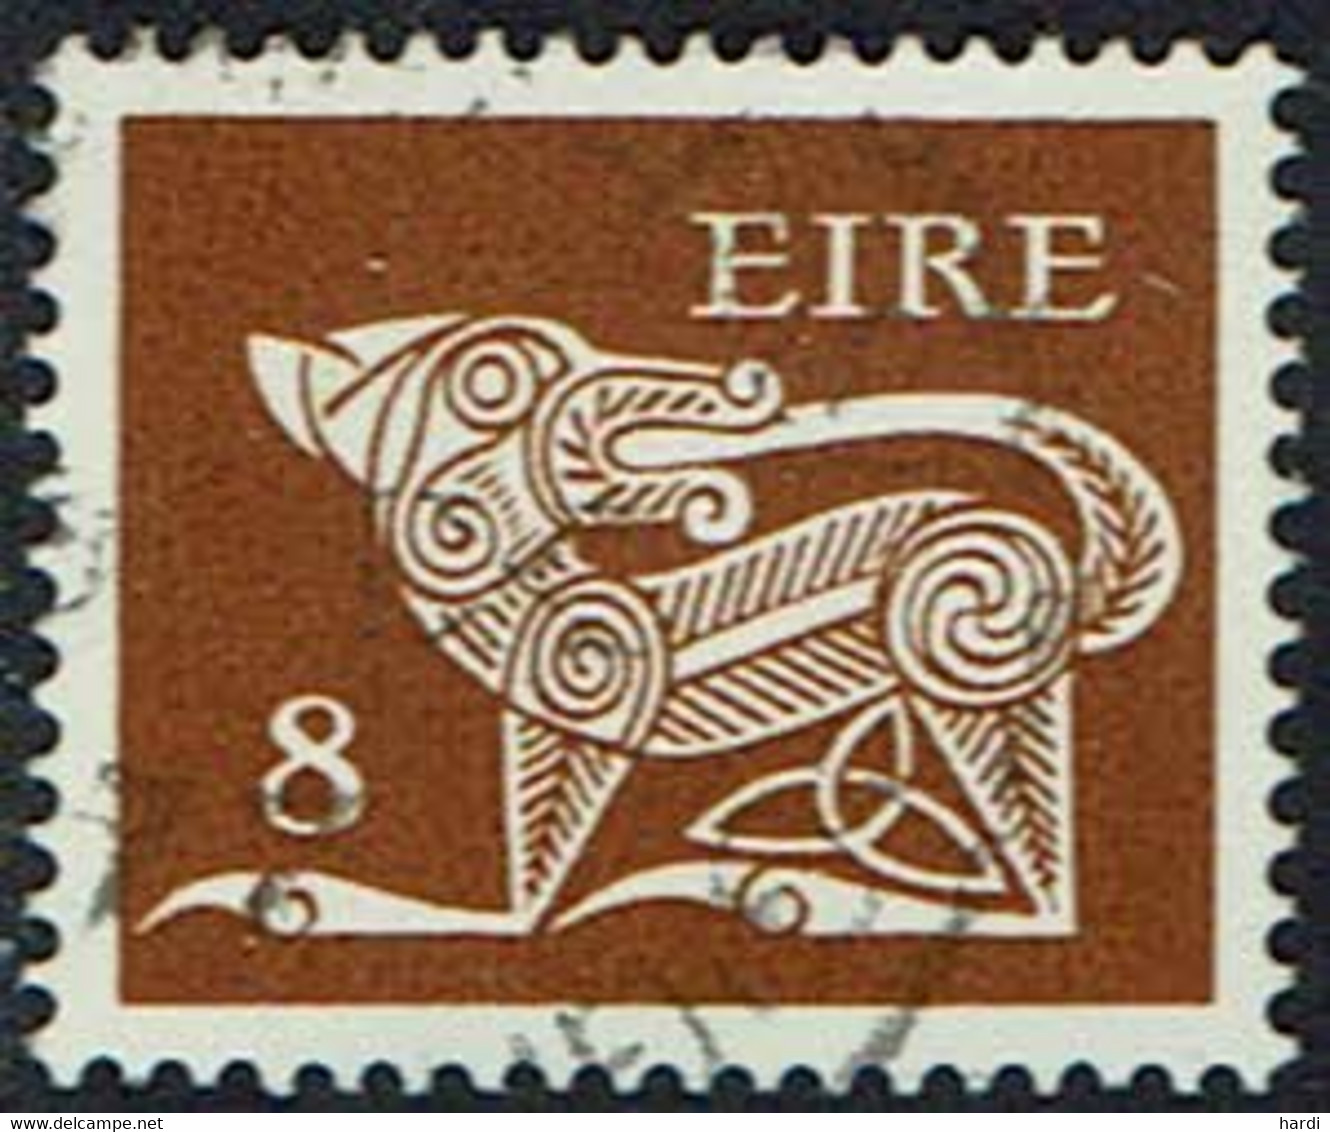 Irland 1976, MiNr 346, Gestempelt - Usati